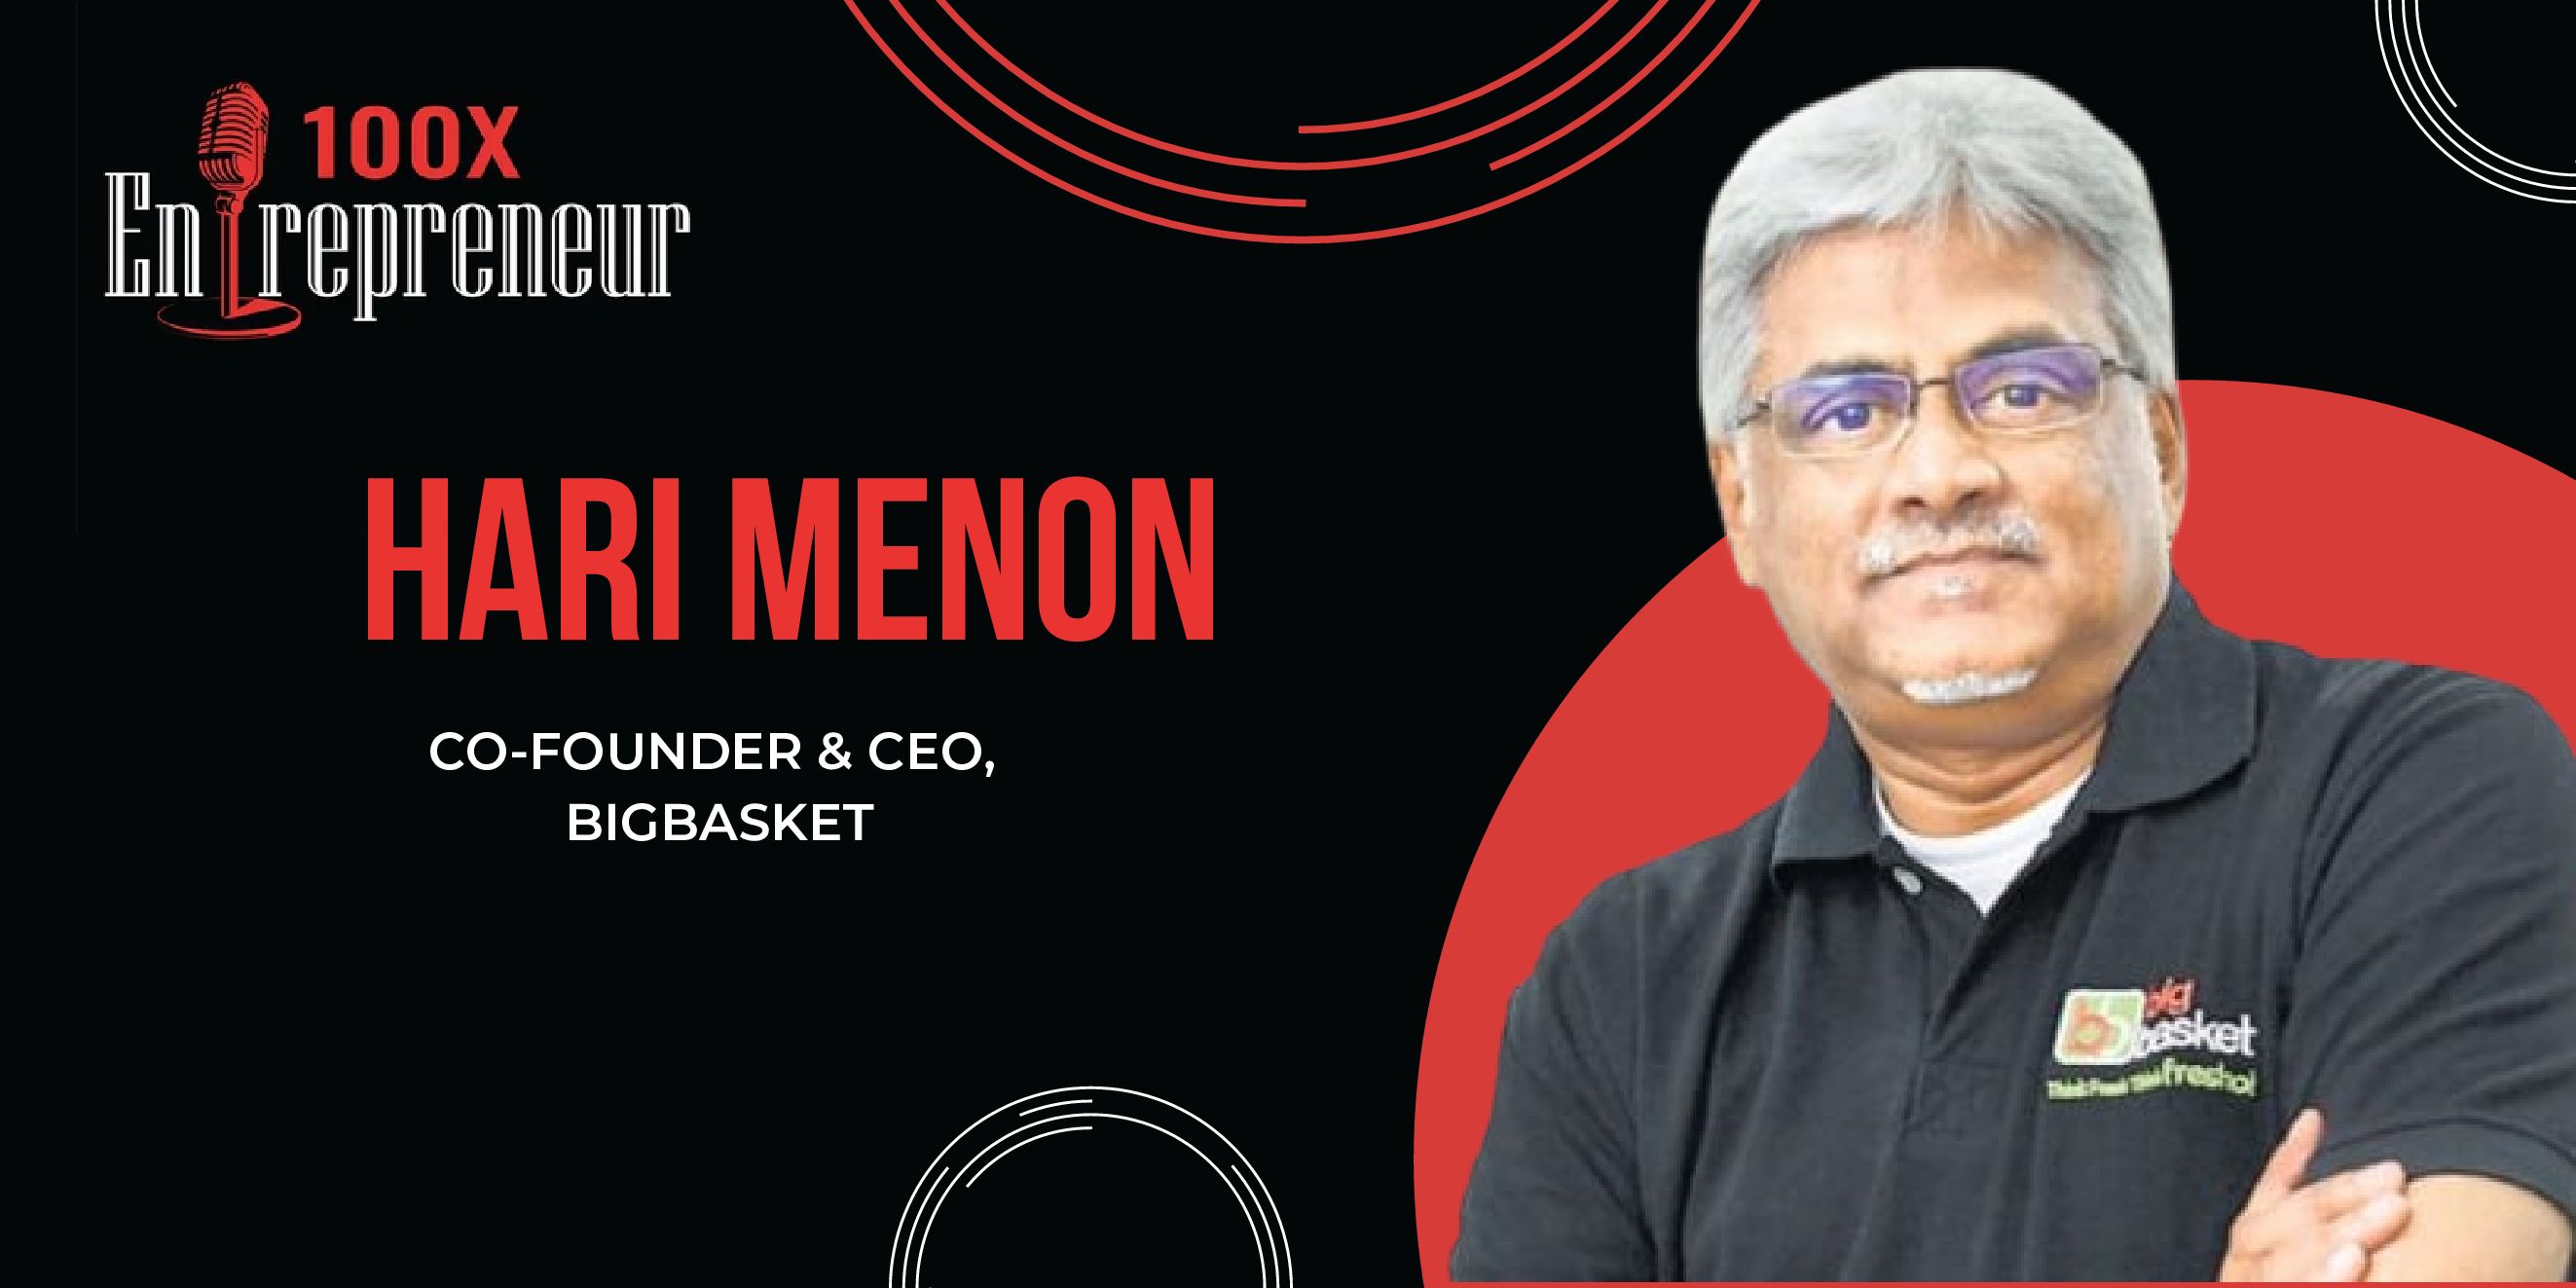 What made Hari Menon start Bigbasket at the age of 50